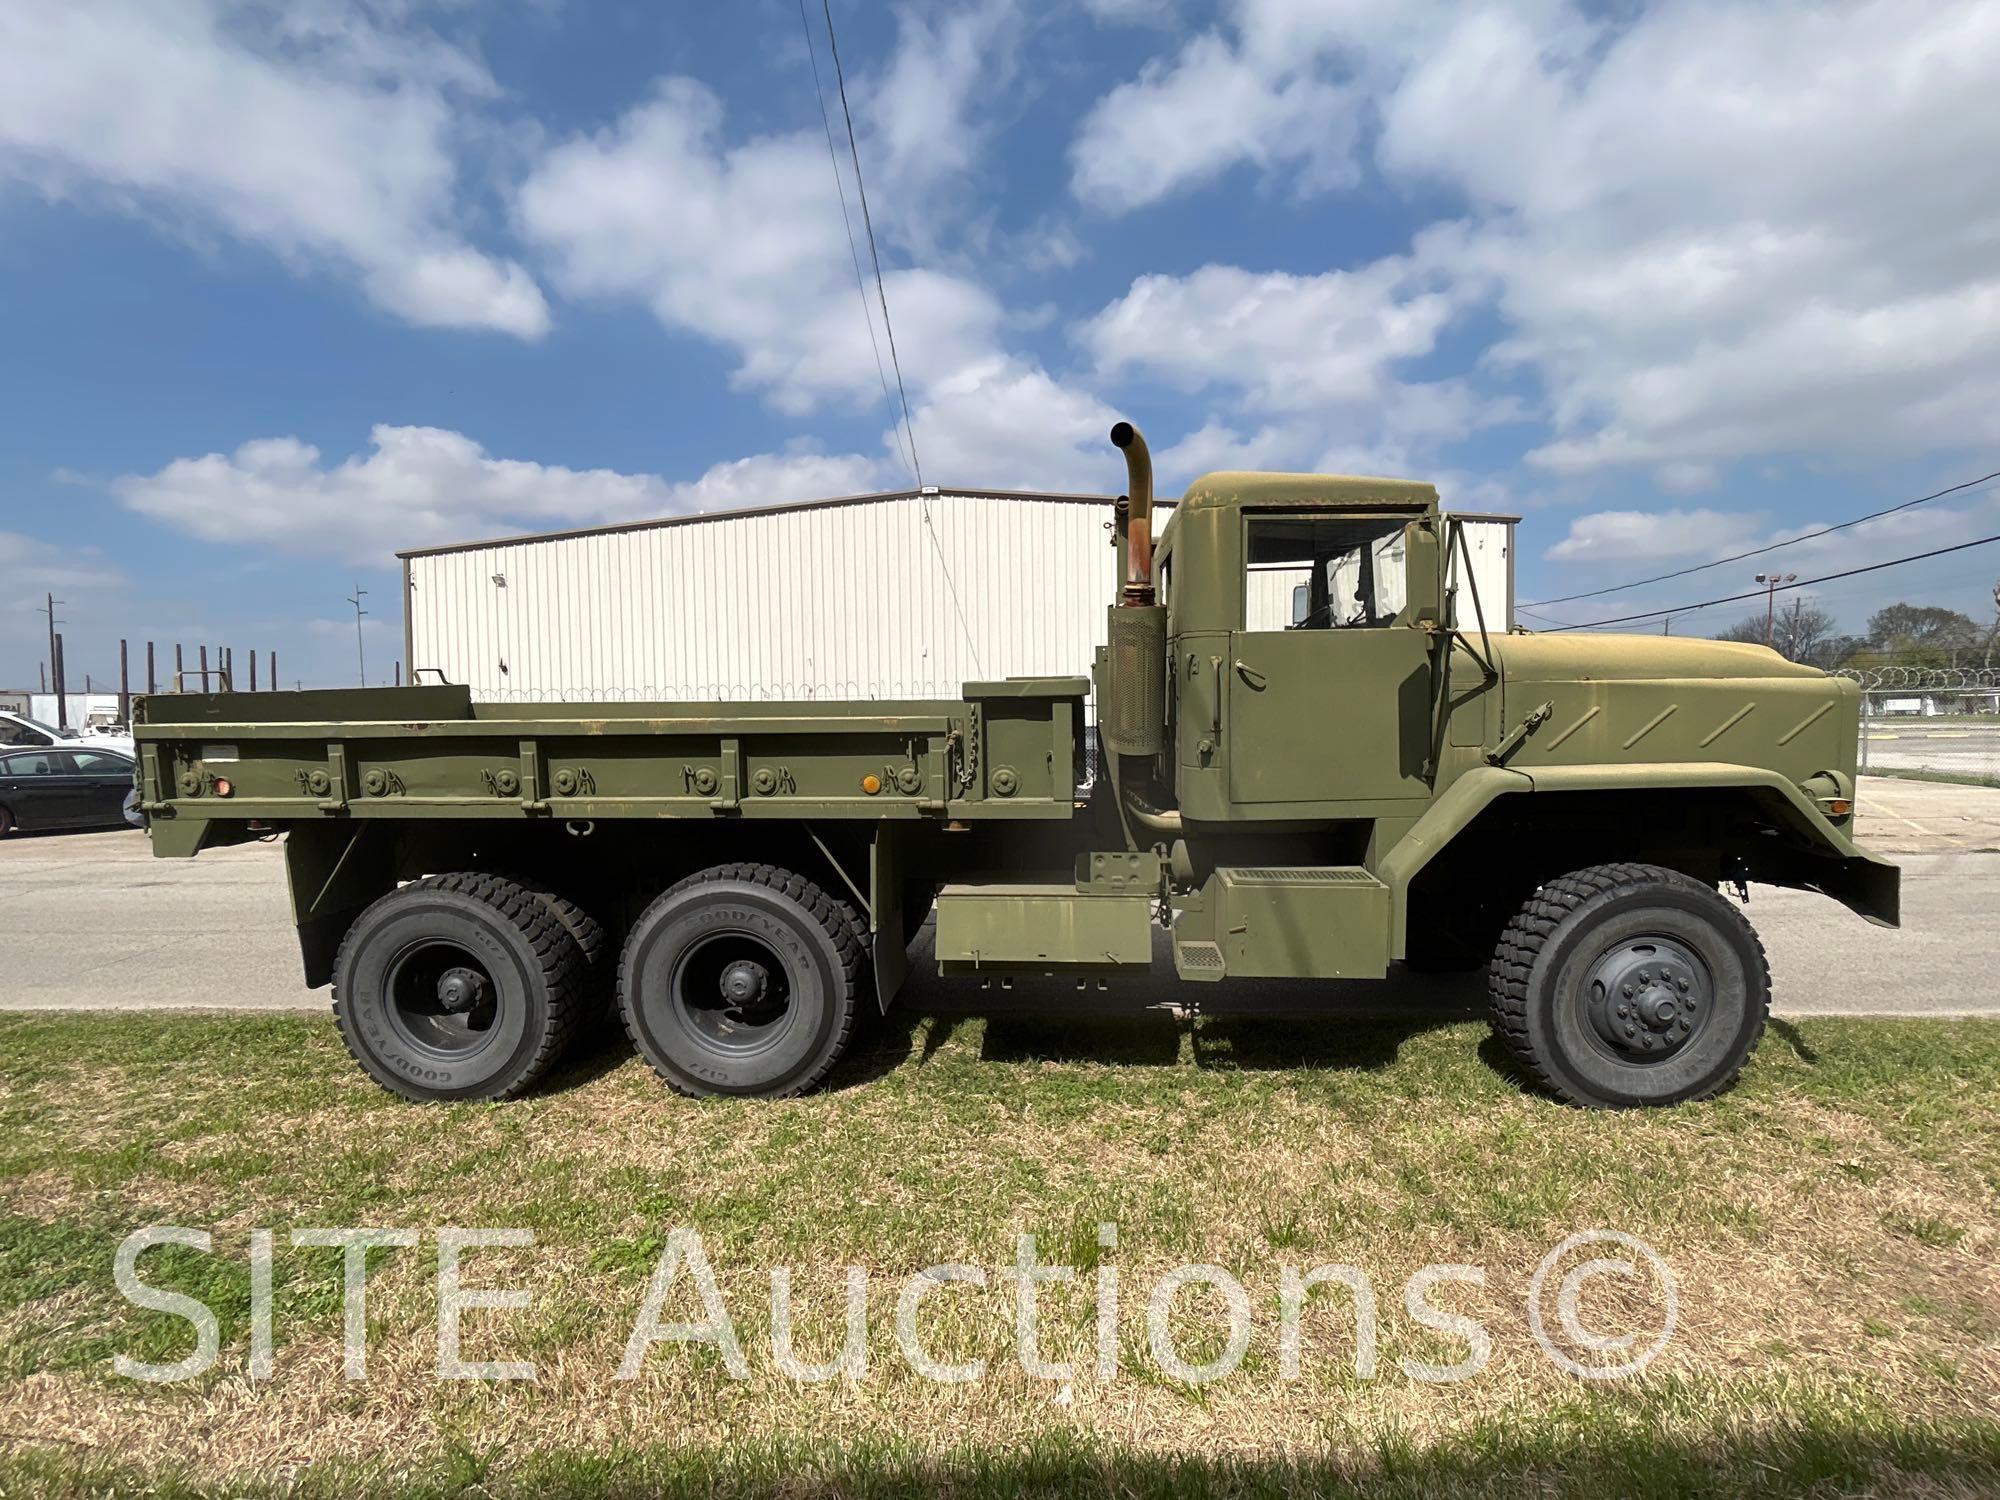 1988 AM General 5 Ton 6x6 M923 Military Truck